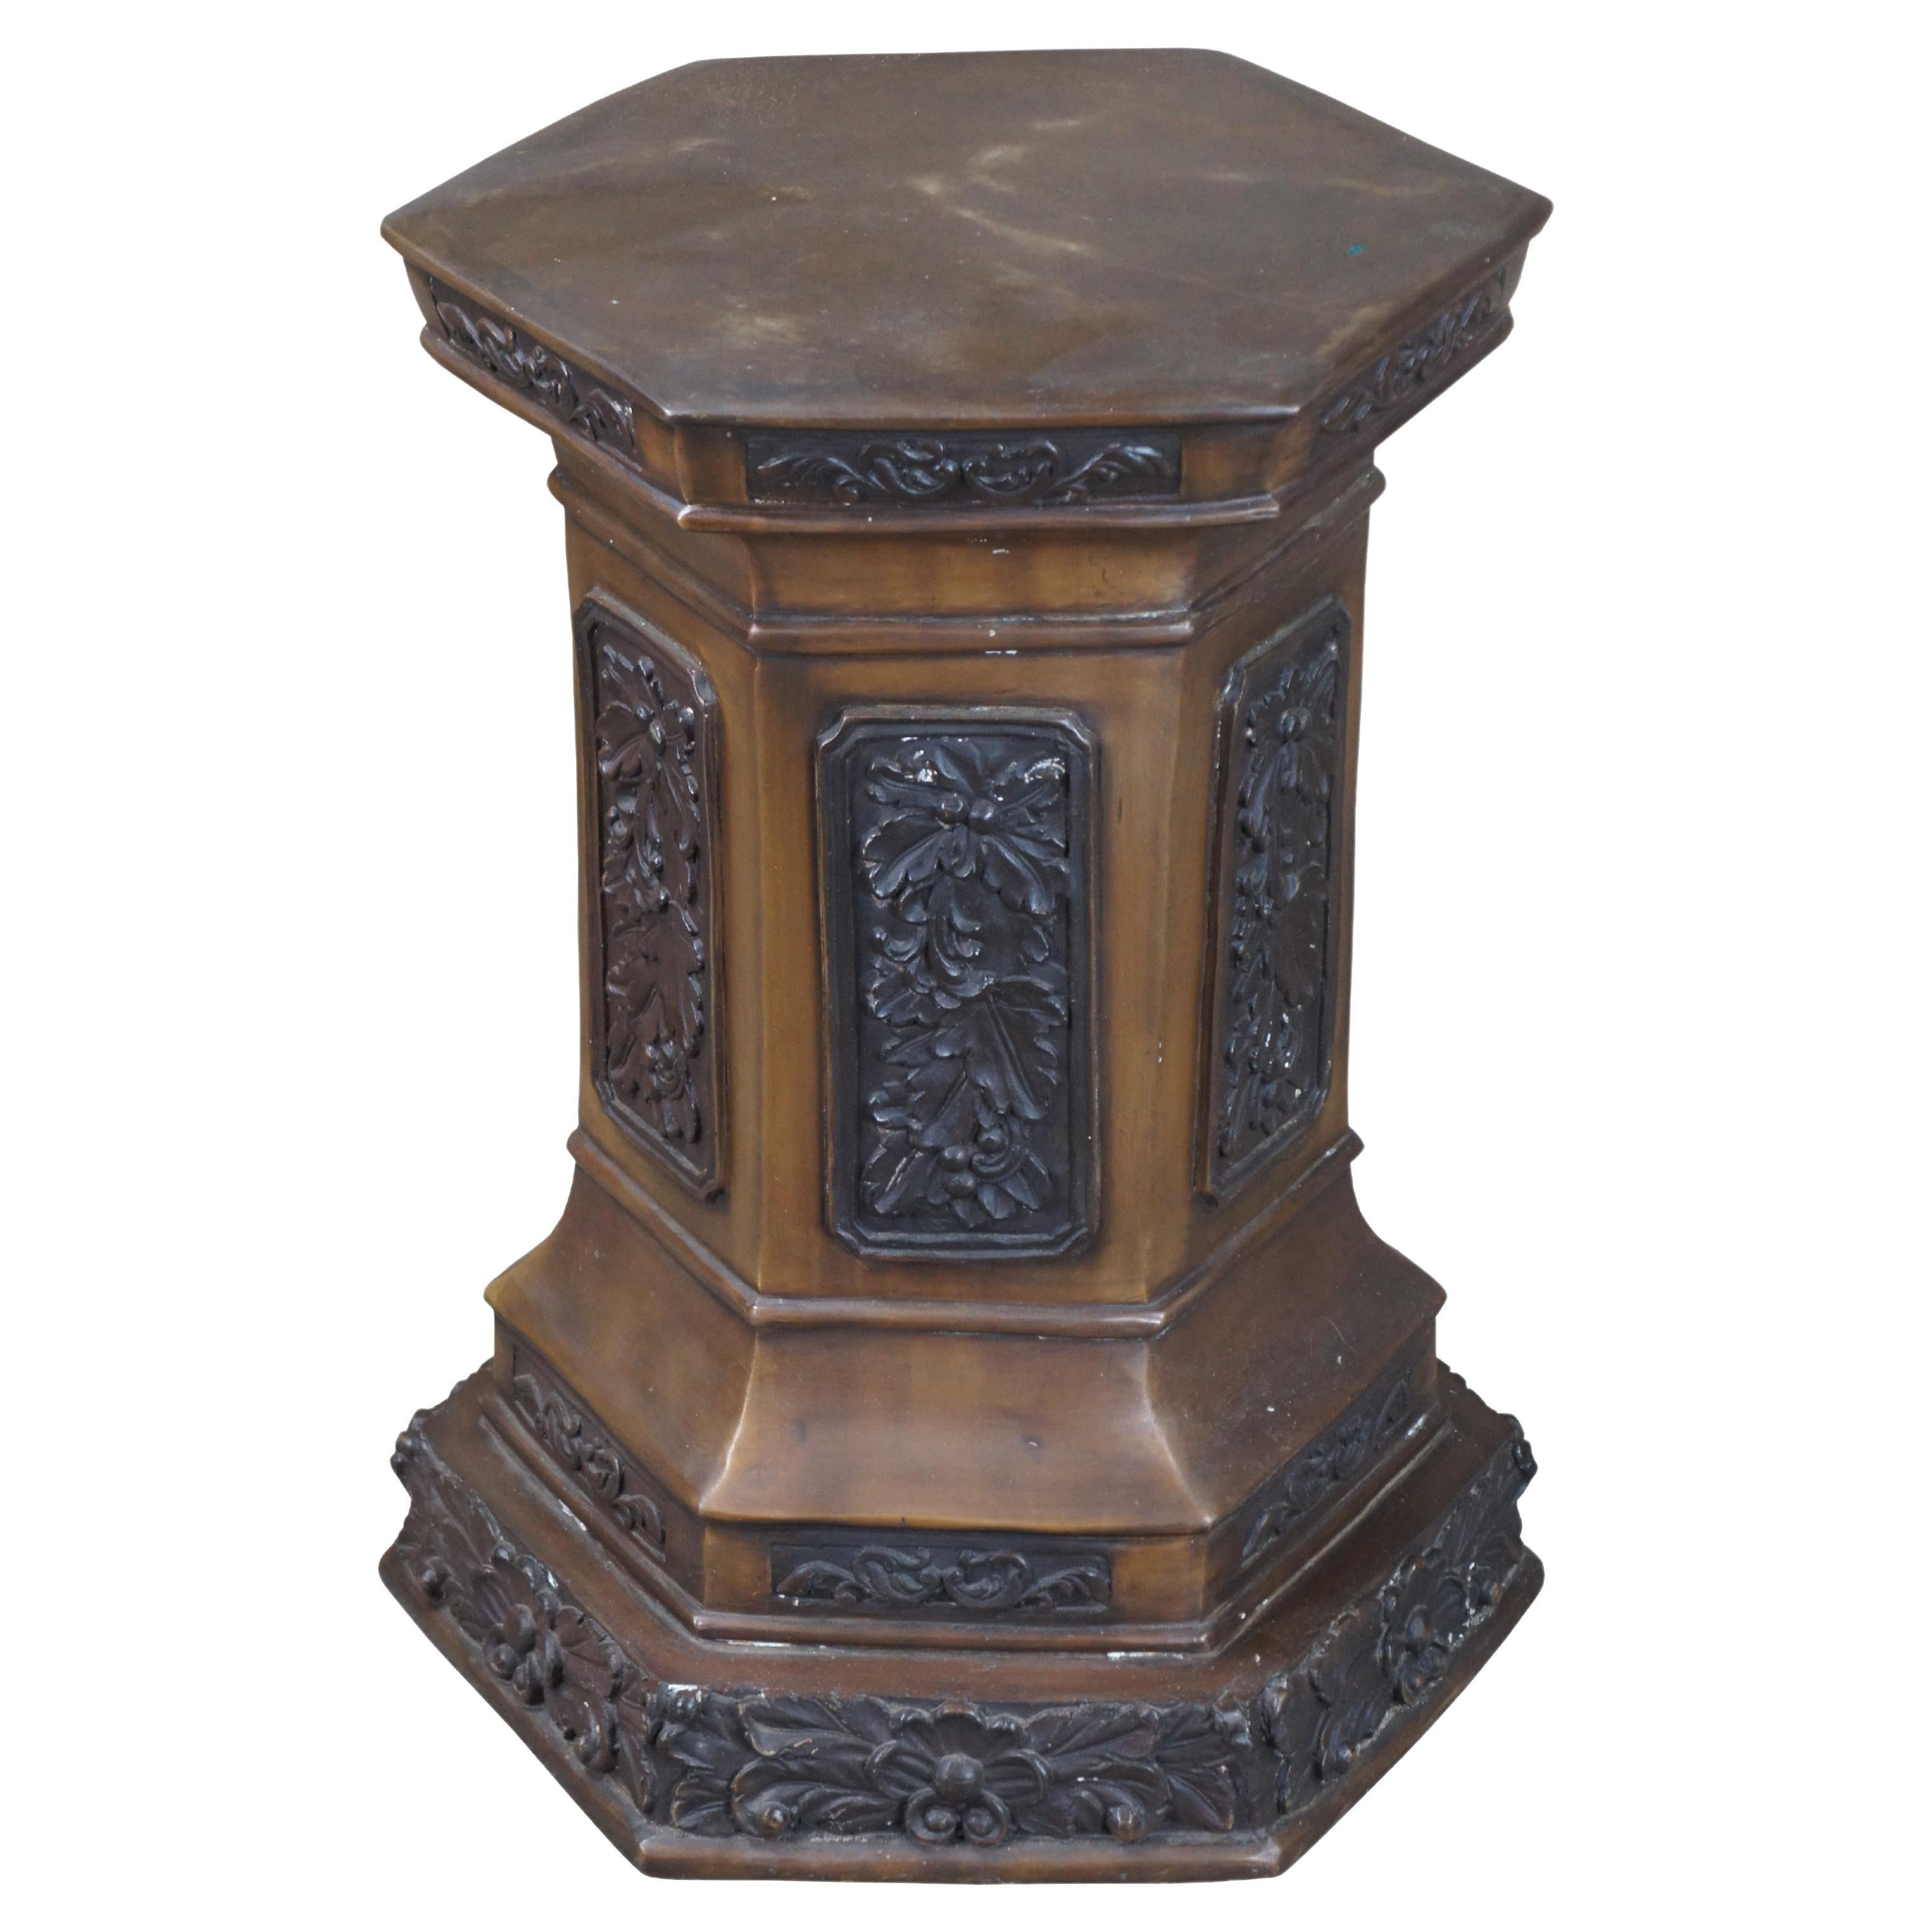 French Renaissance Revival Hexagonal Bronze Sculpture Plant Stand Pedestal 23"